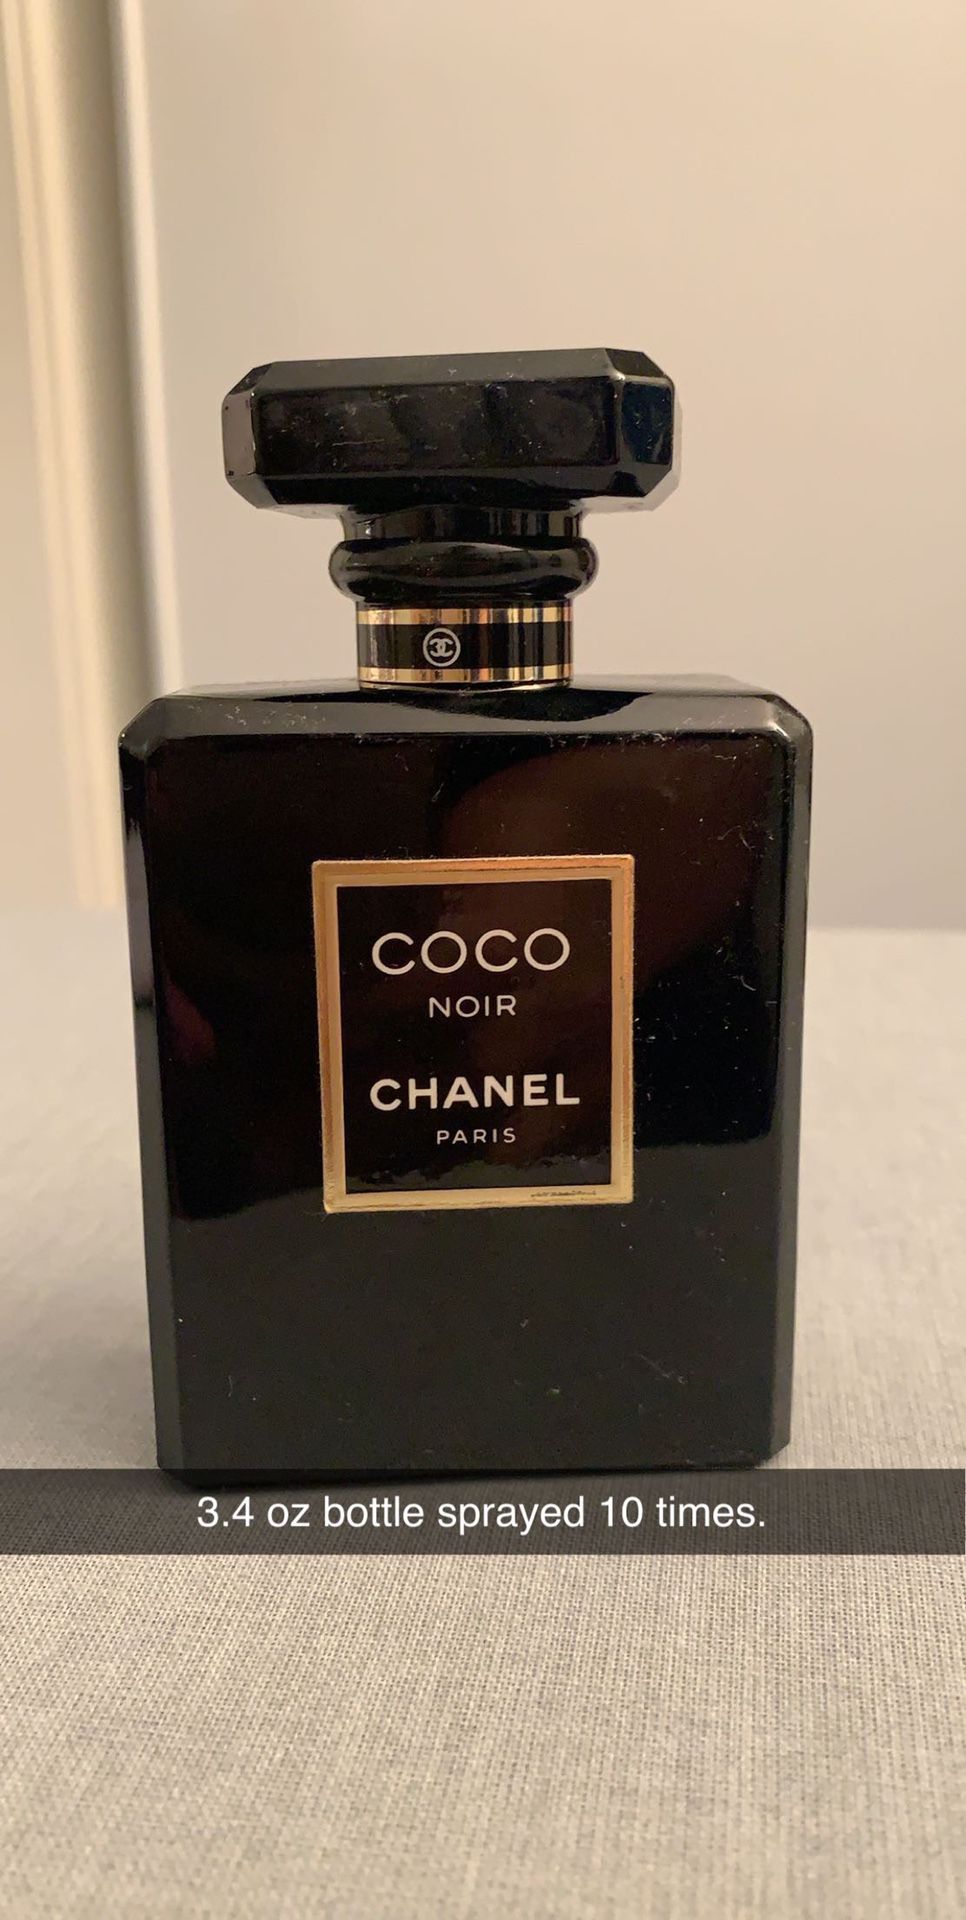 Chanel Noir Perfume